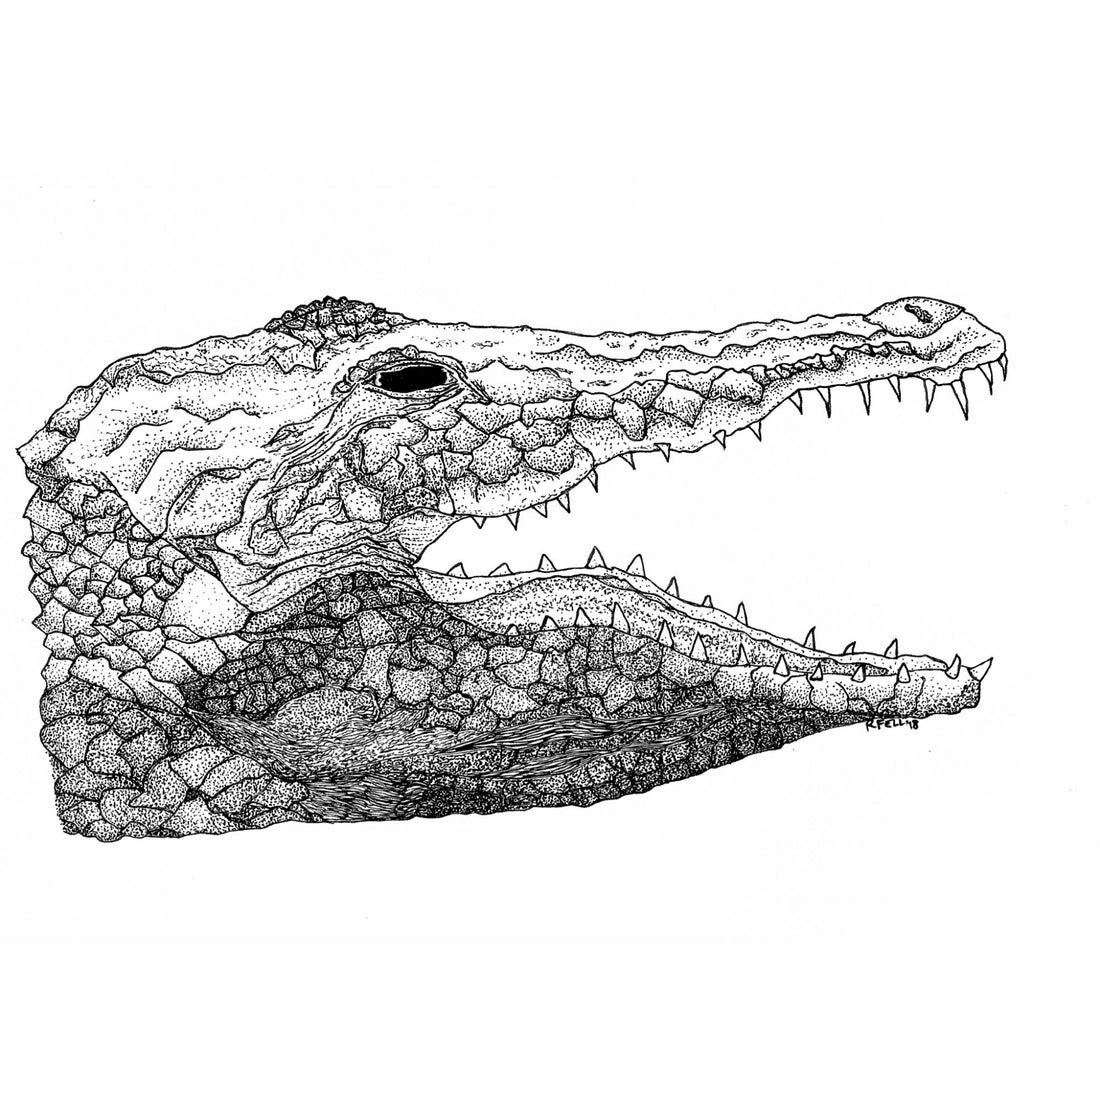 Alligator BW Print